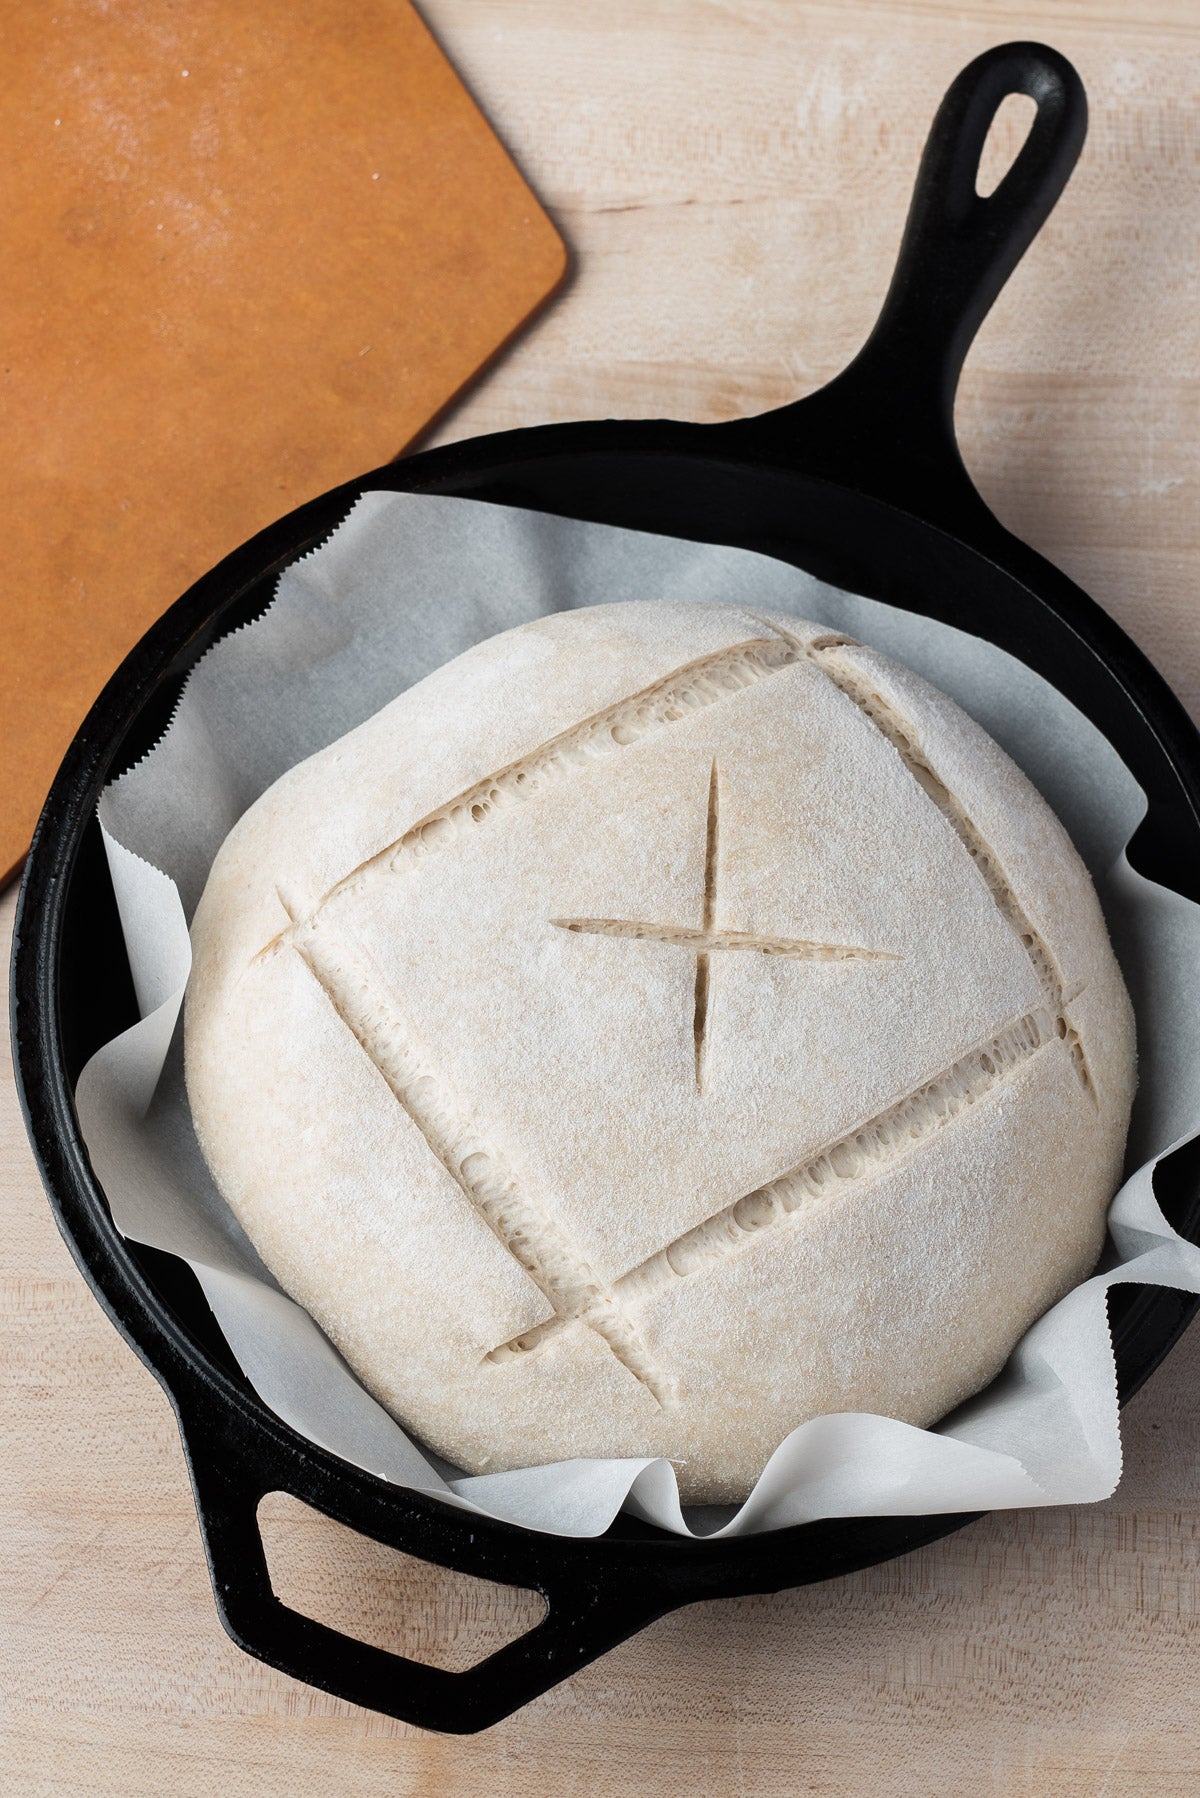 https://www.kingarthurbaking.com/sites/default/files/blog-images/2018/02/Transferring-Bread-Dough-via-@kingarthurflour-3-2.jpg